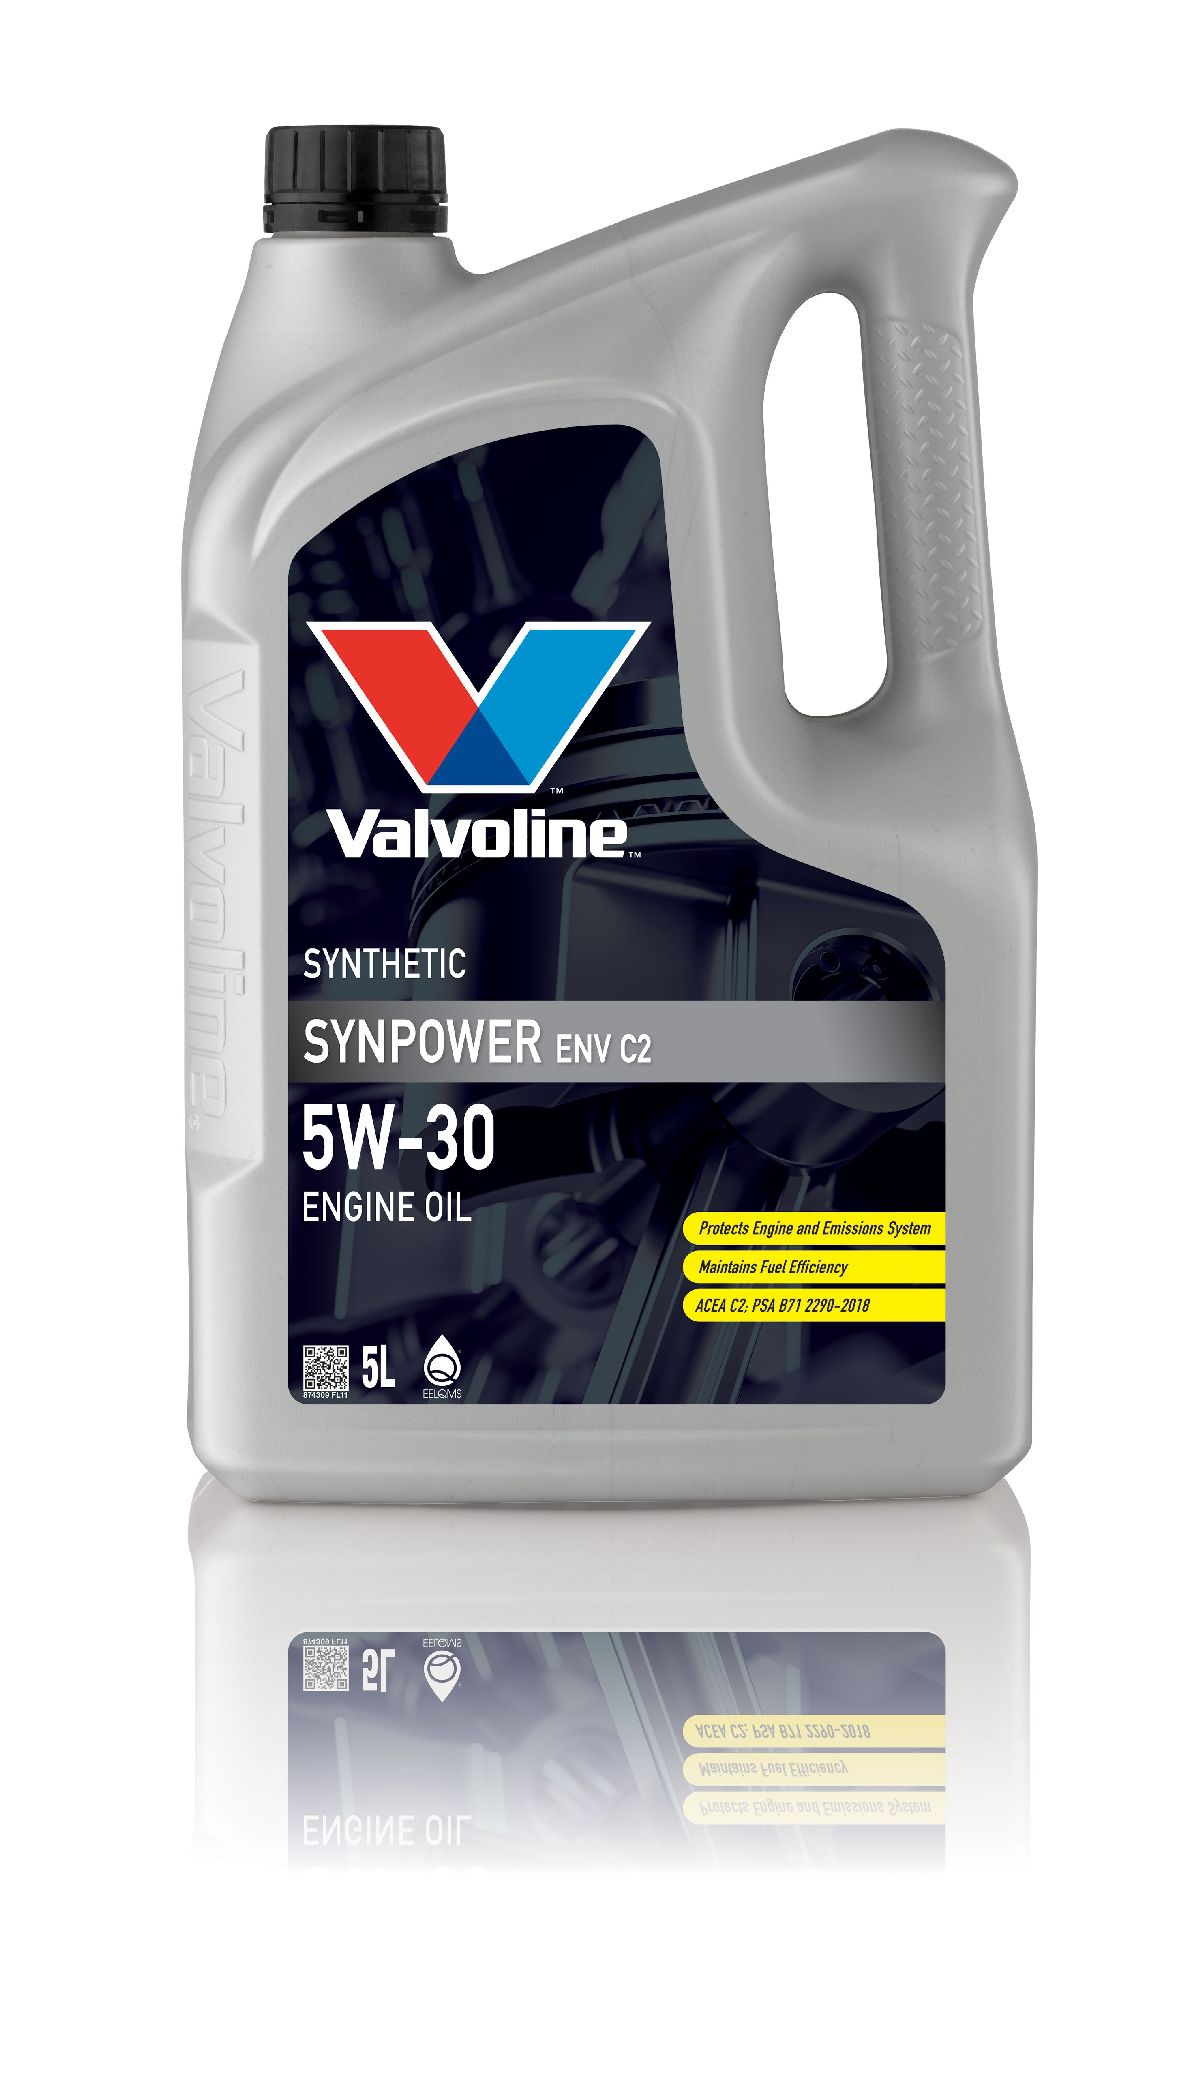 Valvoline Synpower ENV C2 5W-30